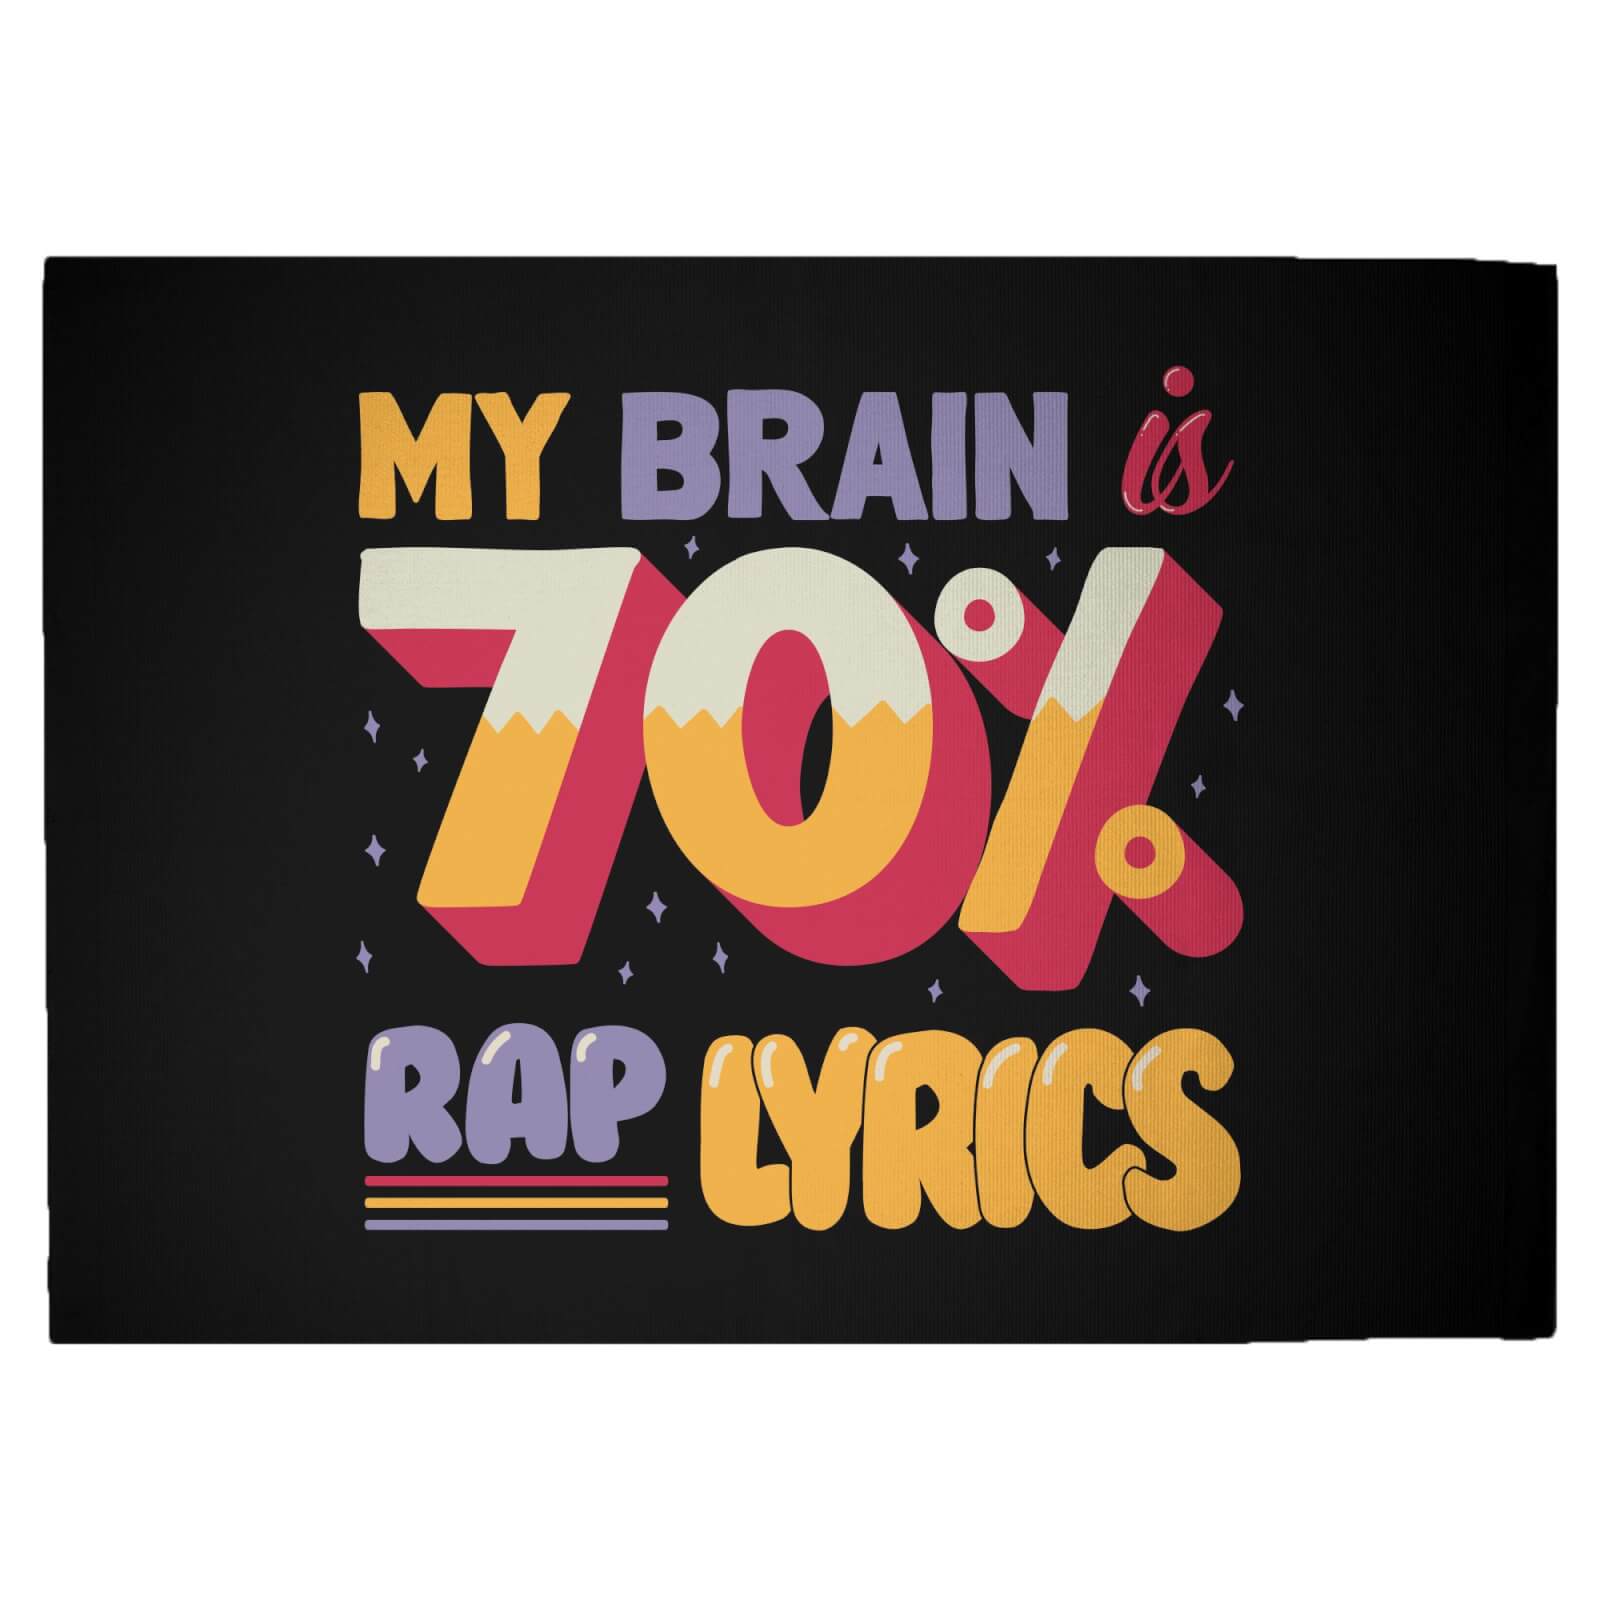 My Brain Is 70% Rap Lyrics Woven Rug - Large